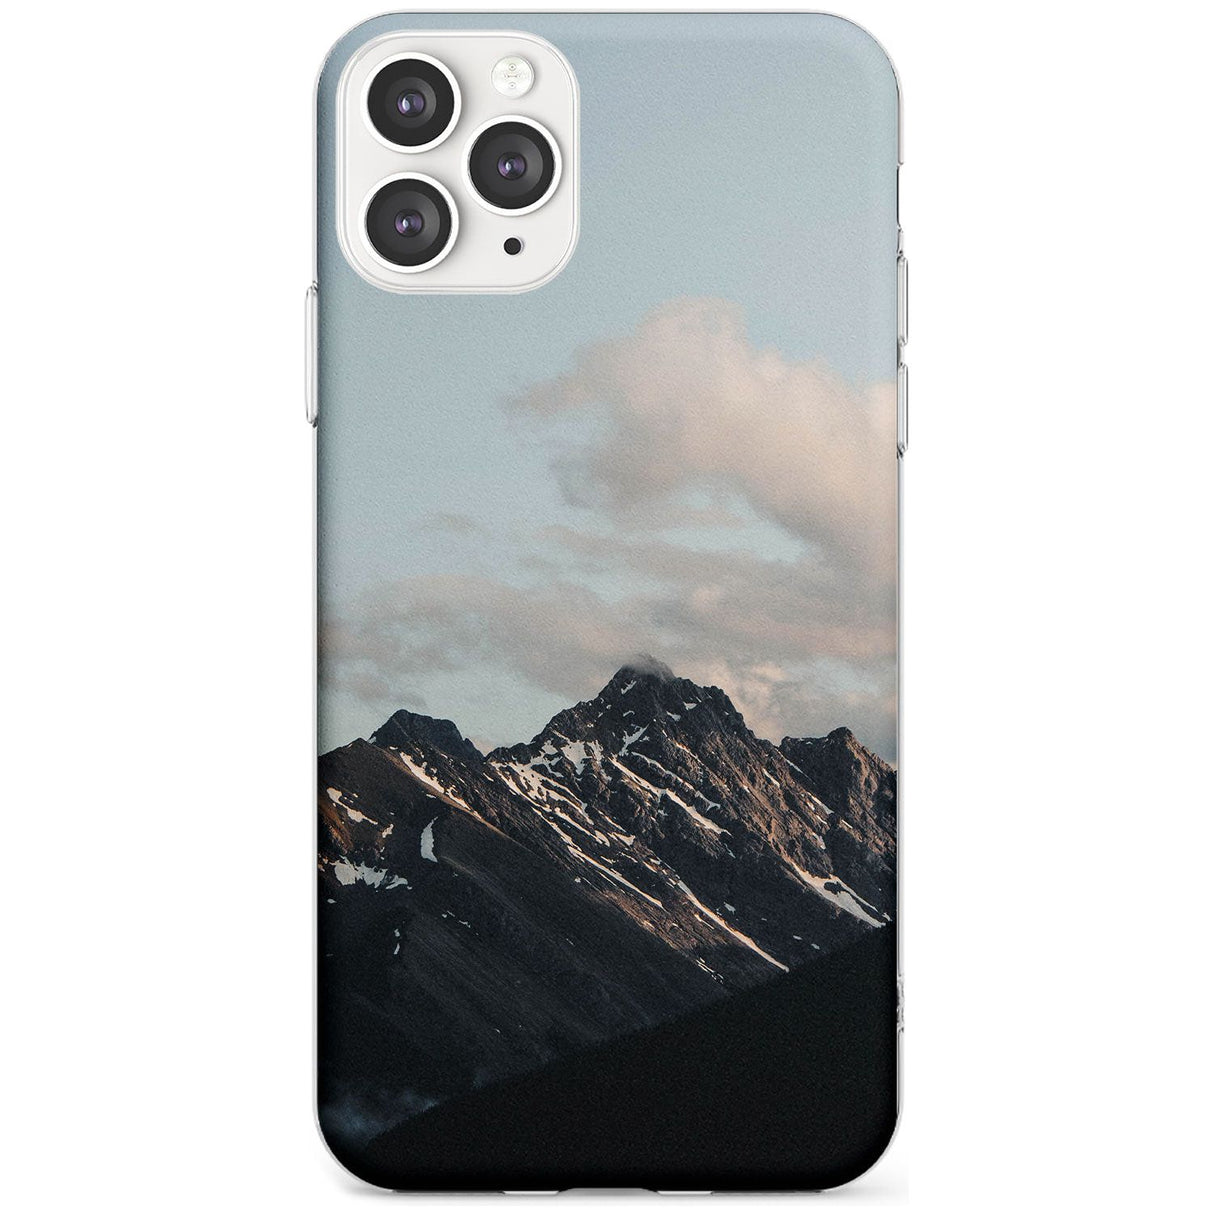 Mountain Range Photograph Slim TPU Phone Case for iPhone 11 Pro Max